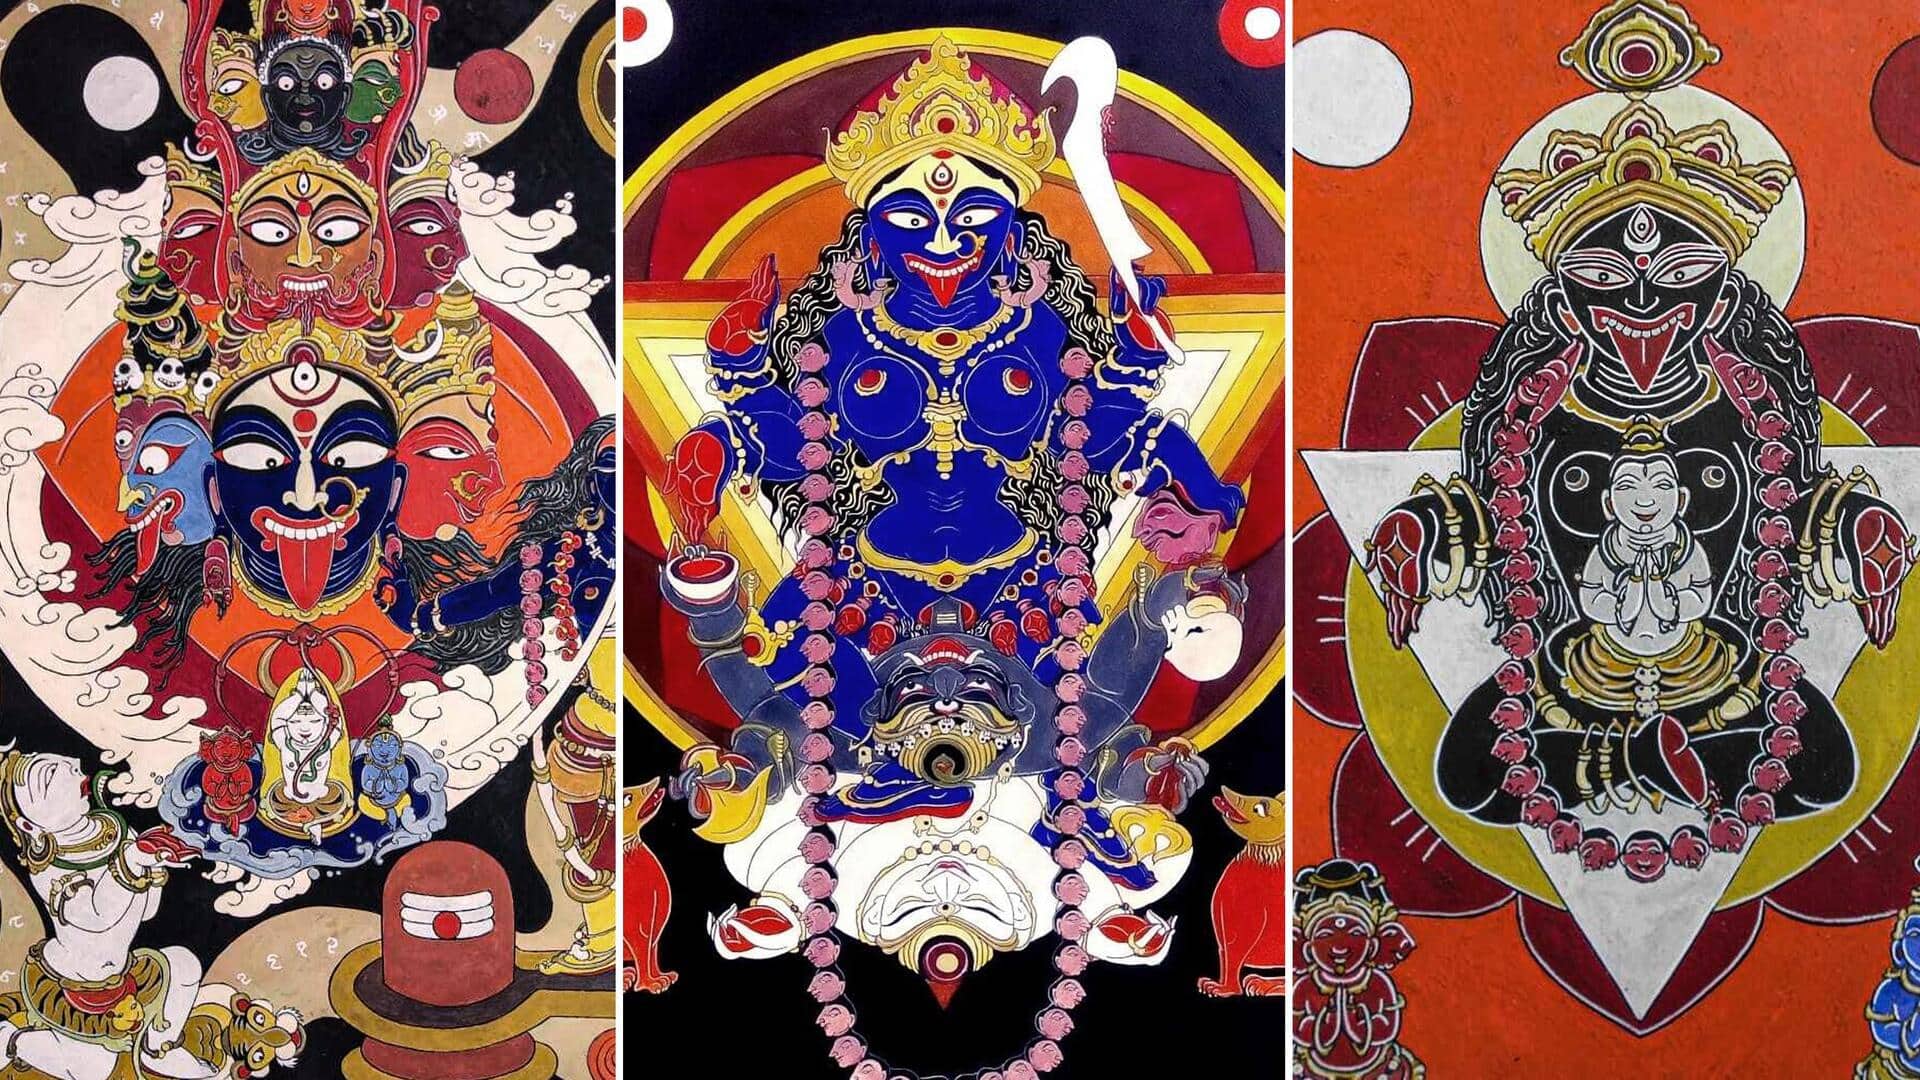 Kolkata welcomes unprecedented Kali art ahead of Kali Puja